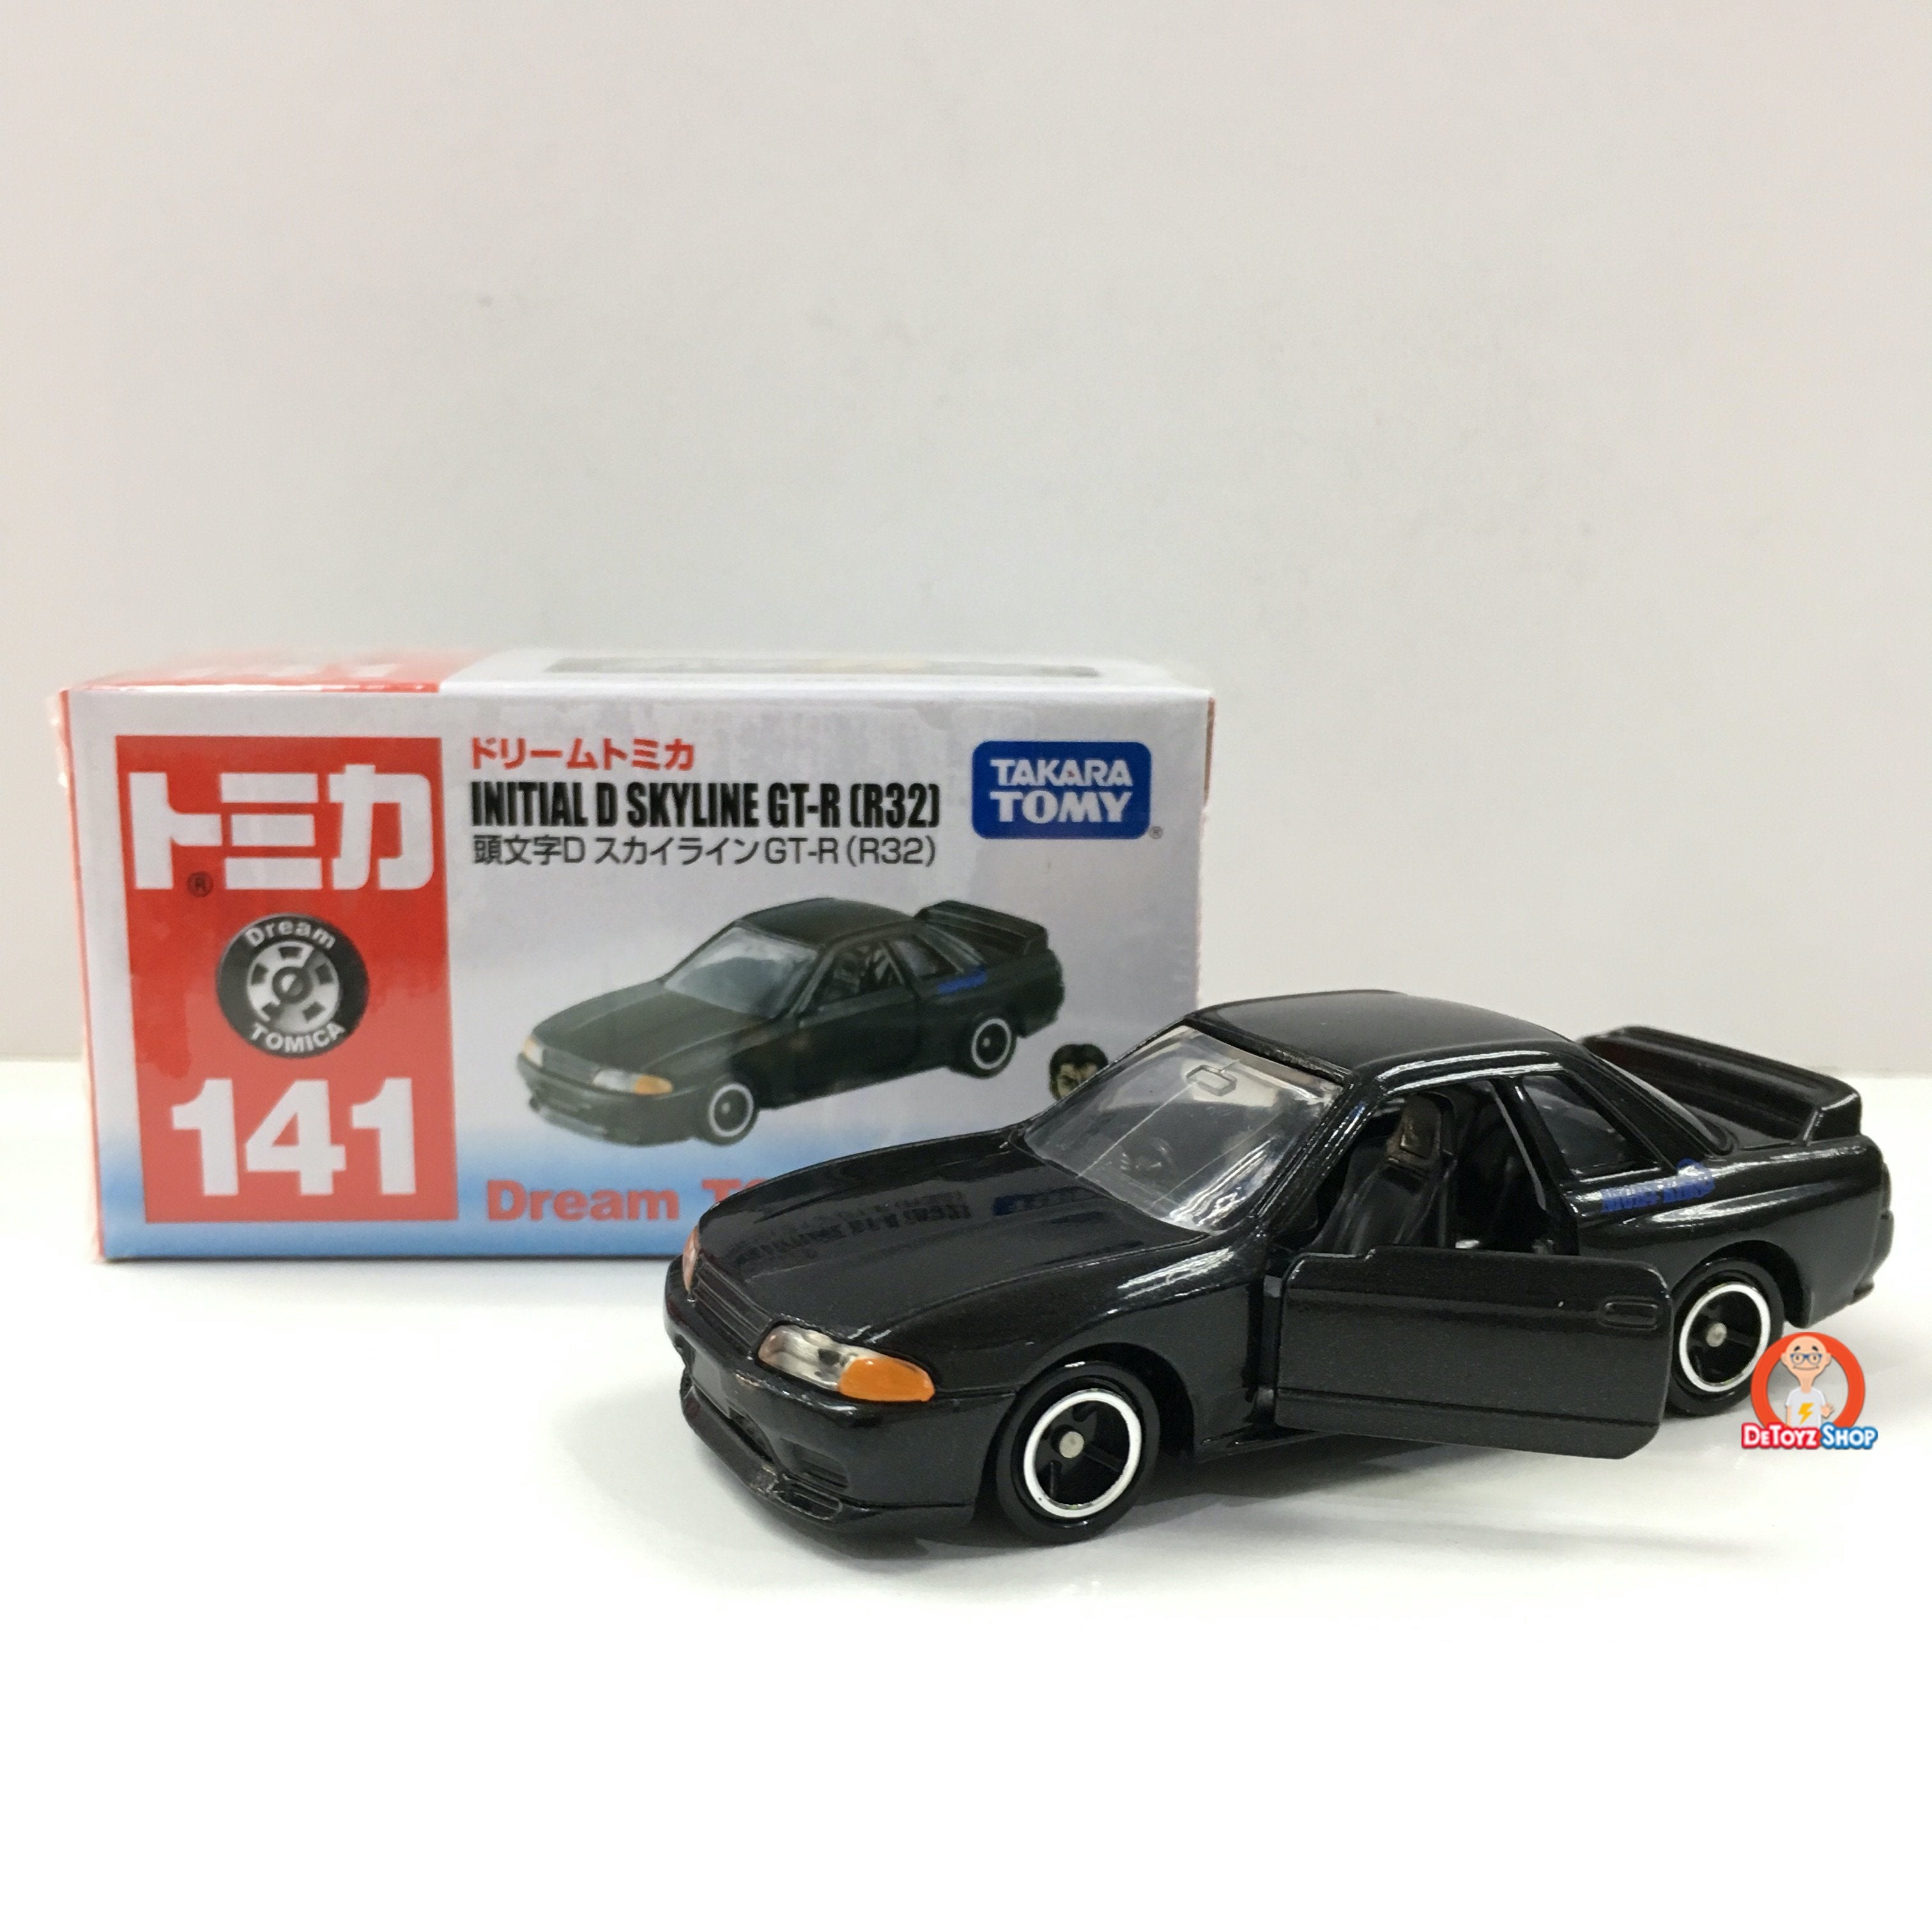 Dream Tomica Initial D Skyline GT-R [R32]